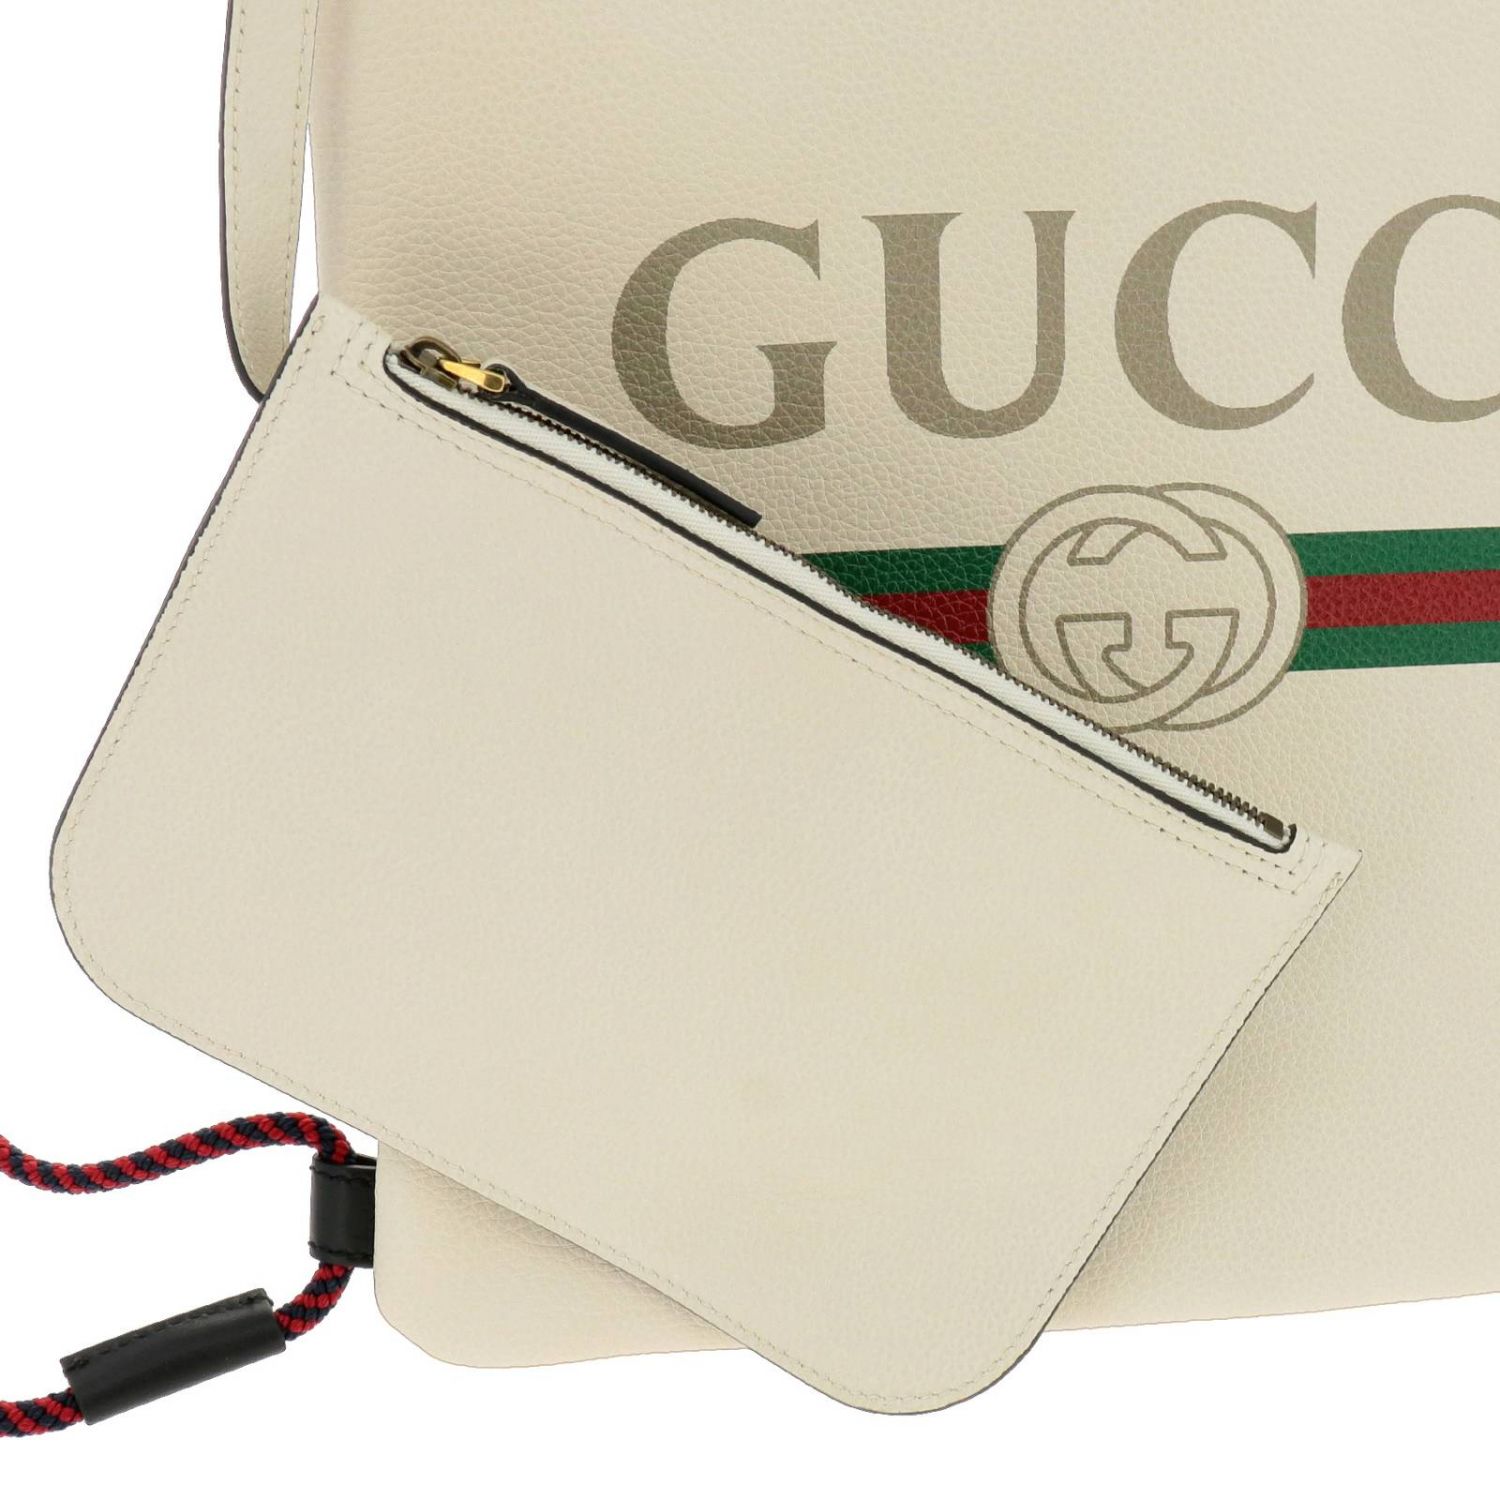 Gucci Zaino White Cripto Logo Drawstring Backpack 523586